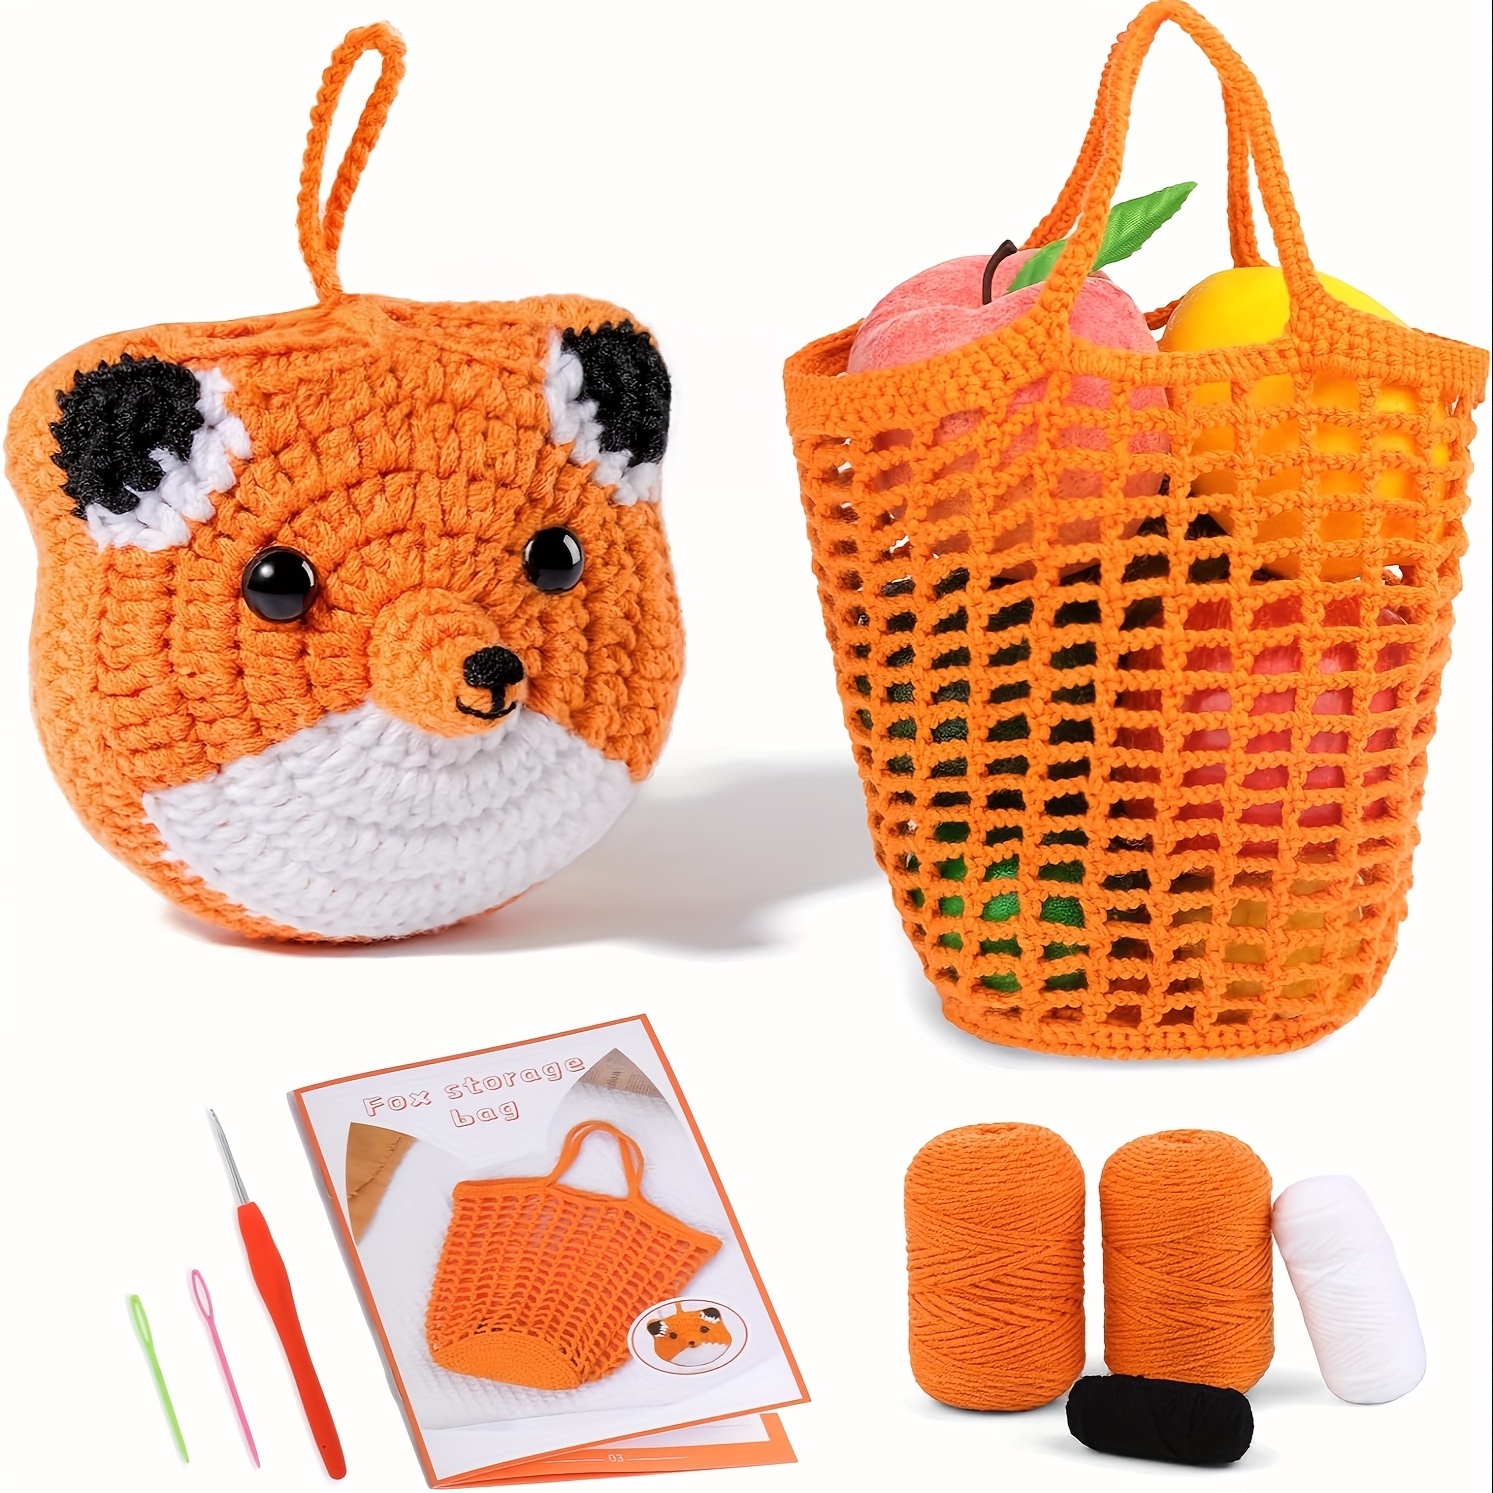 

fiber Fantasy" Diy Crochet Fox Shoulder Bag Kit For Beginners - Complete Starter Set With Yarn, Step-by-step Instructions & Craft Supplies